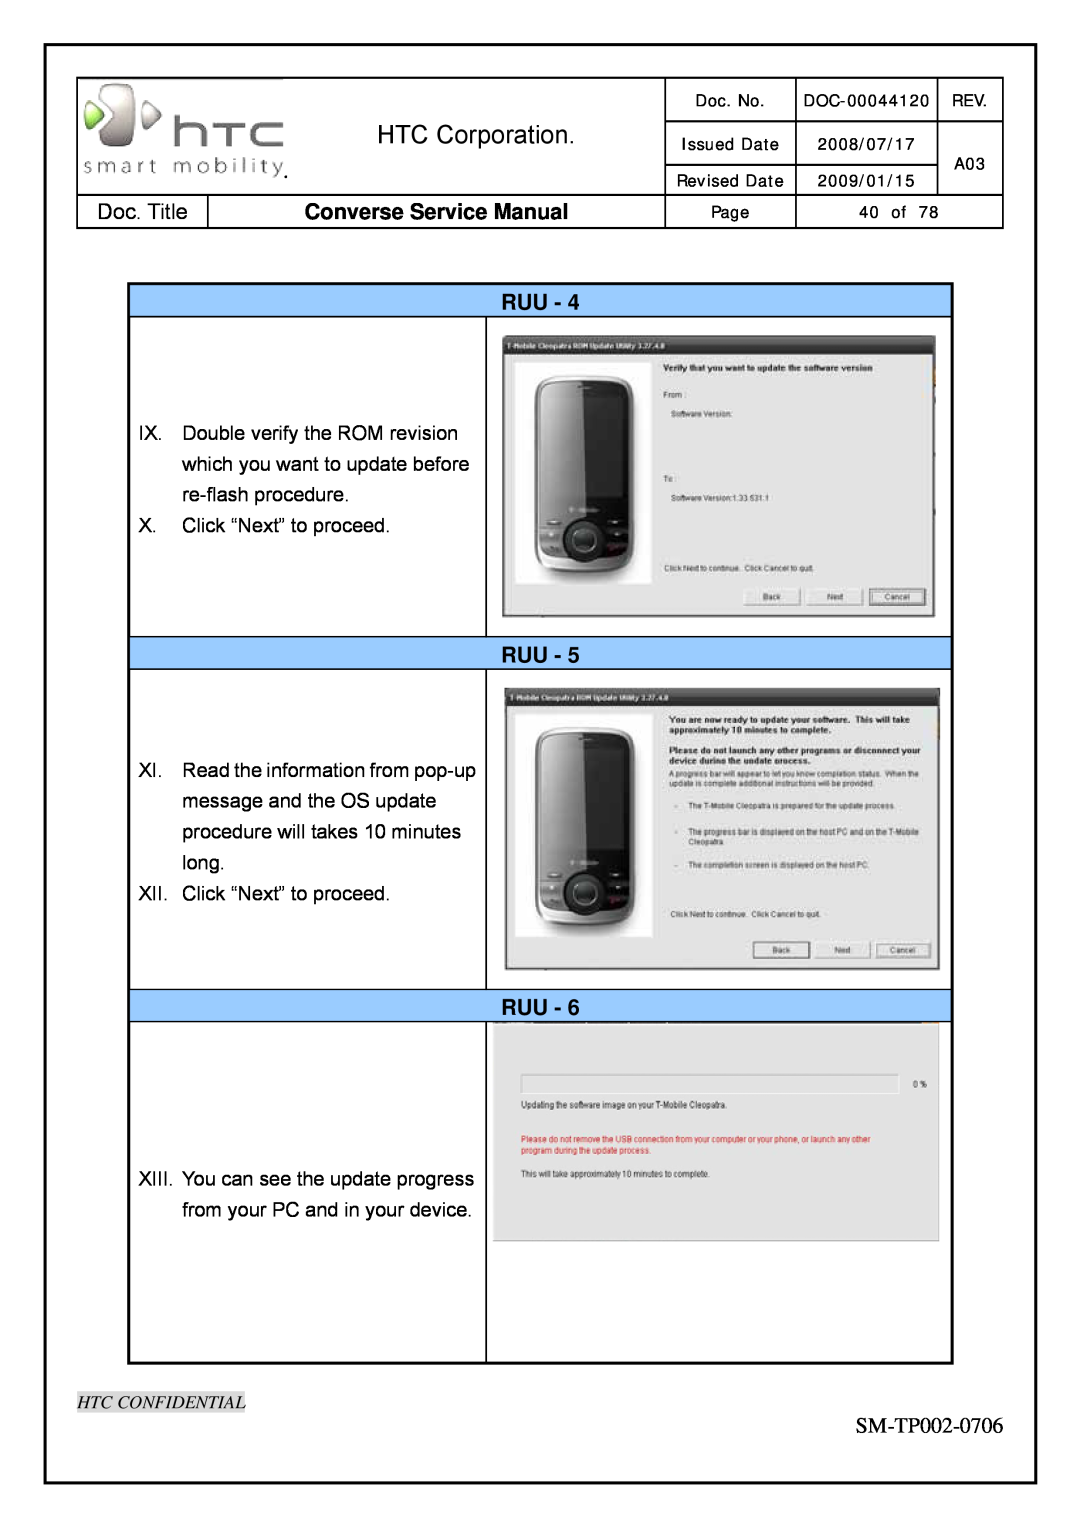 HTC SM-TP002-0706 service manual HTC Corporation, Converse Service Manual, X. Click “Next” to proceed 